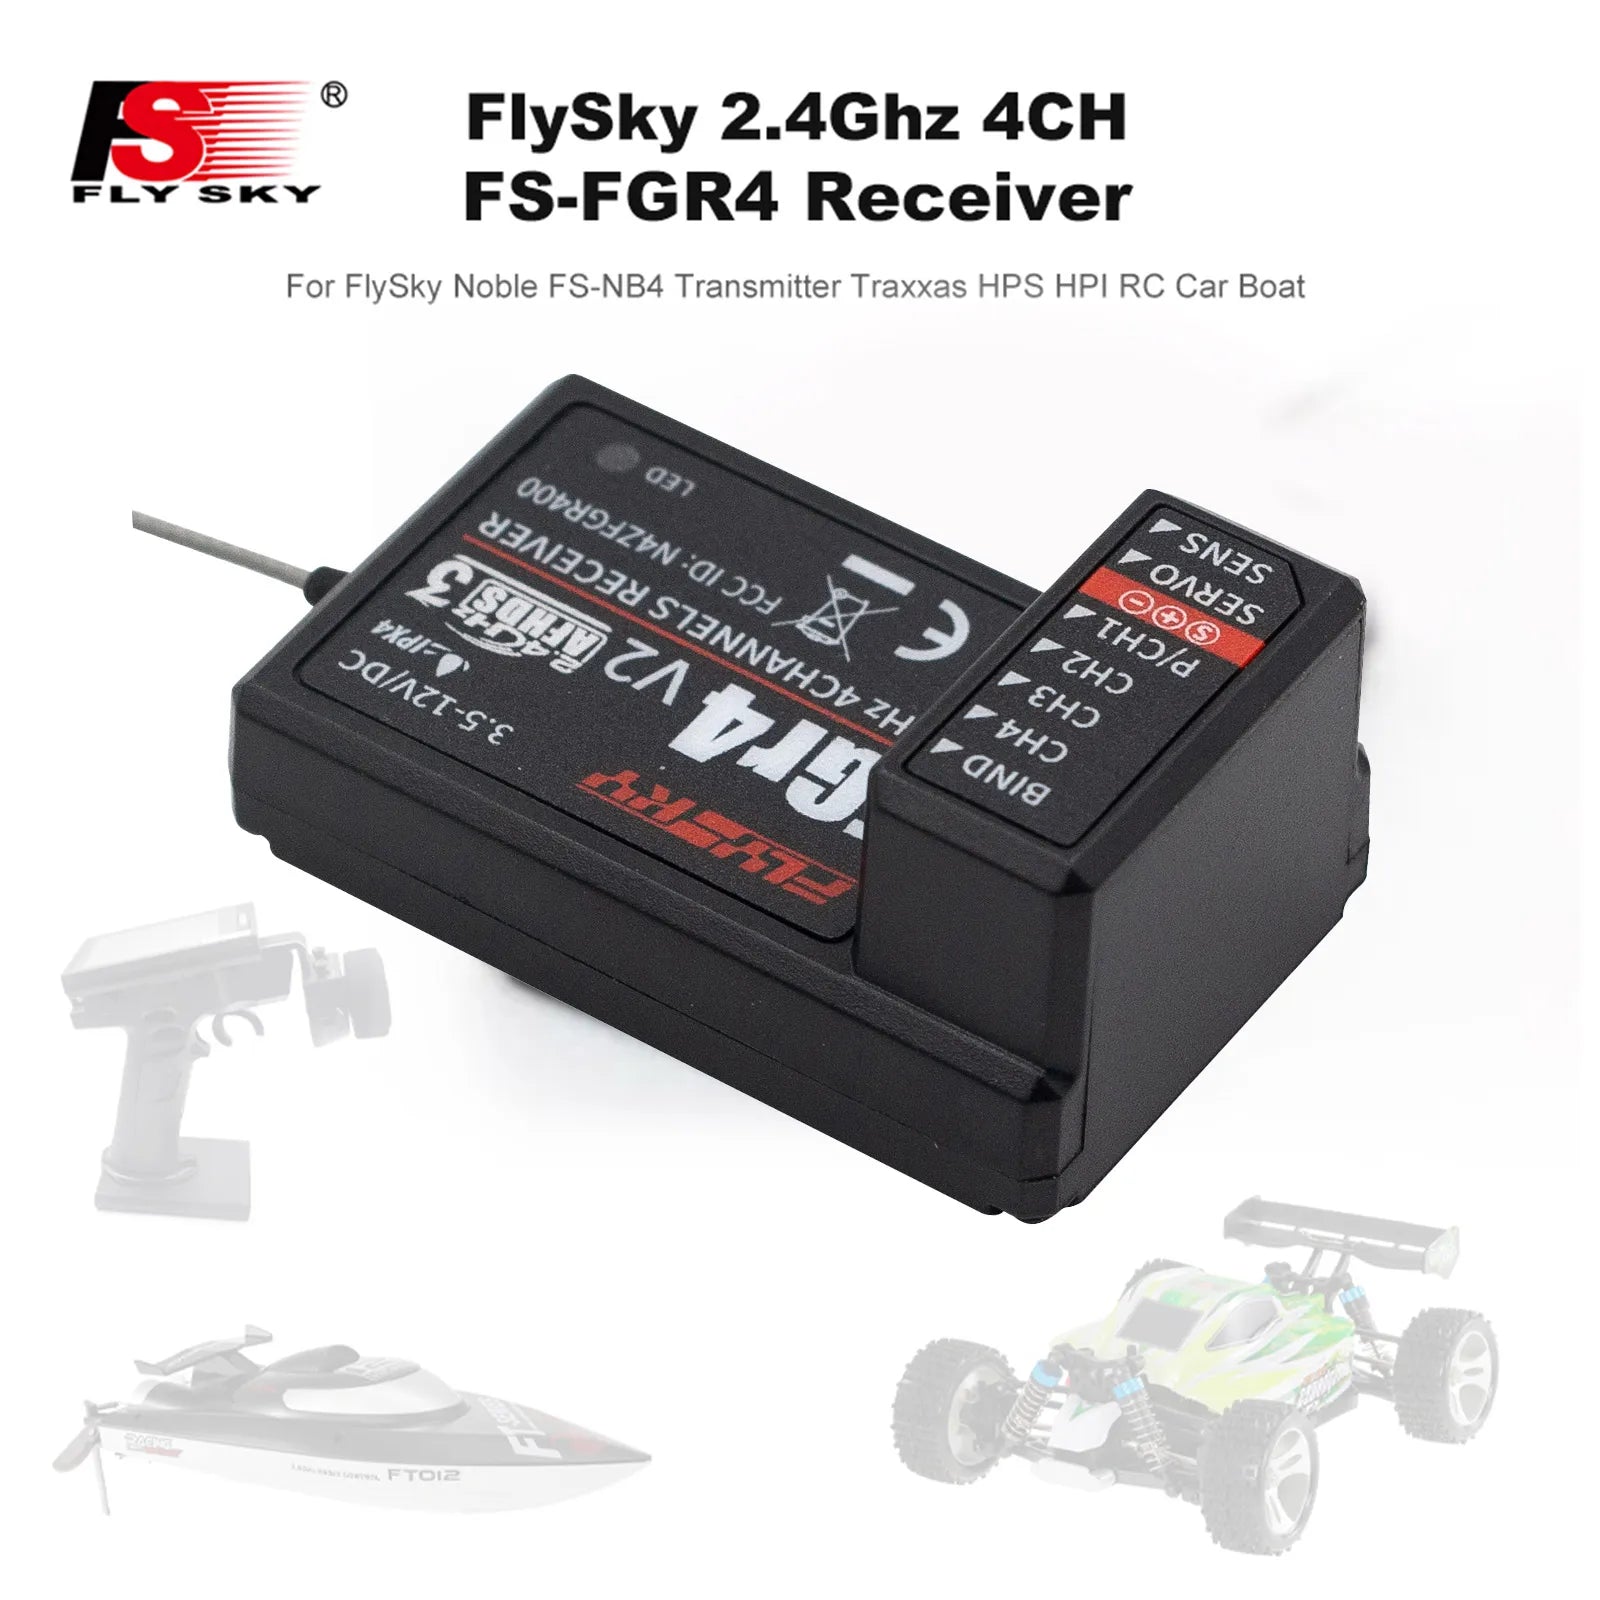 FlySky FS-FGR4 2.4Ghz 4CH Receiver, 3 FlySky 2.4Ghz ACH Fly Sky FS-FGR4